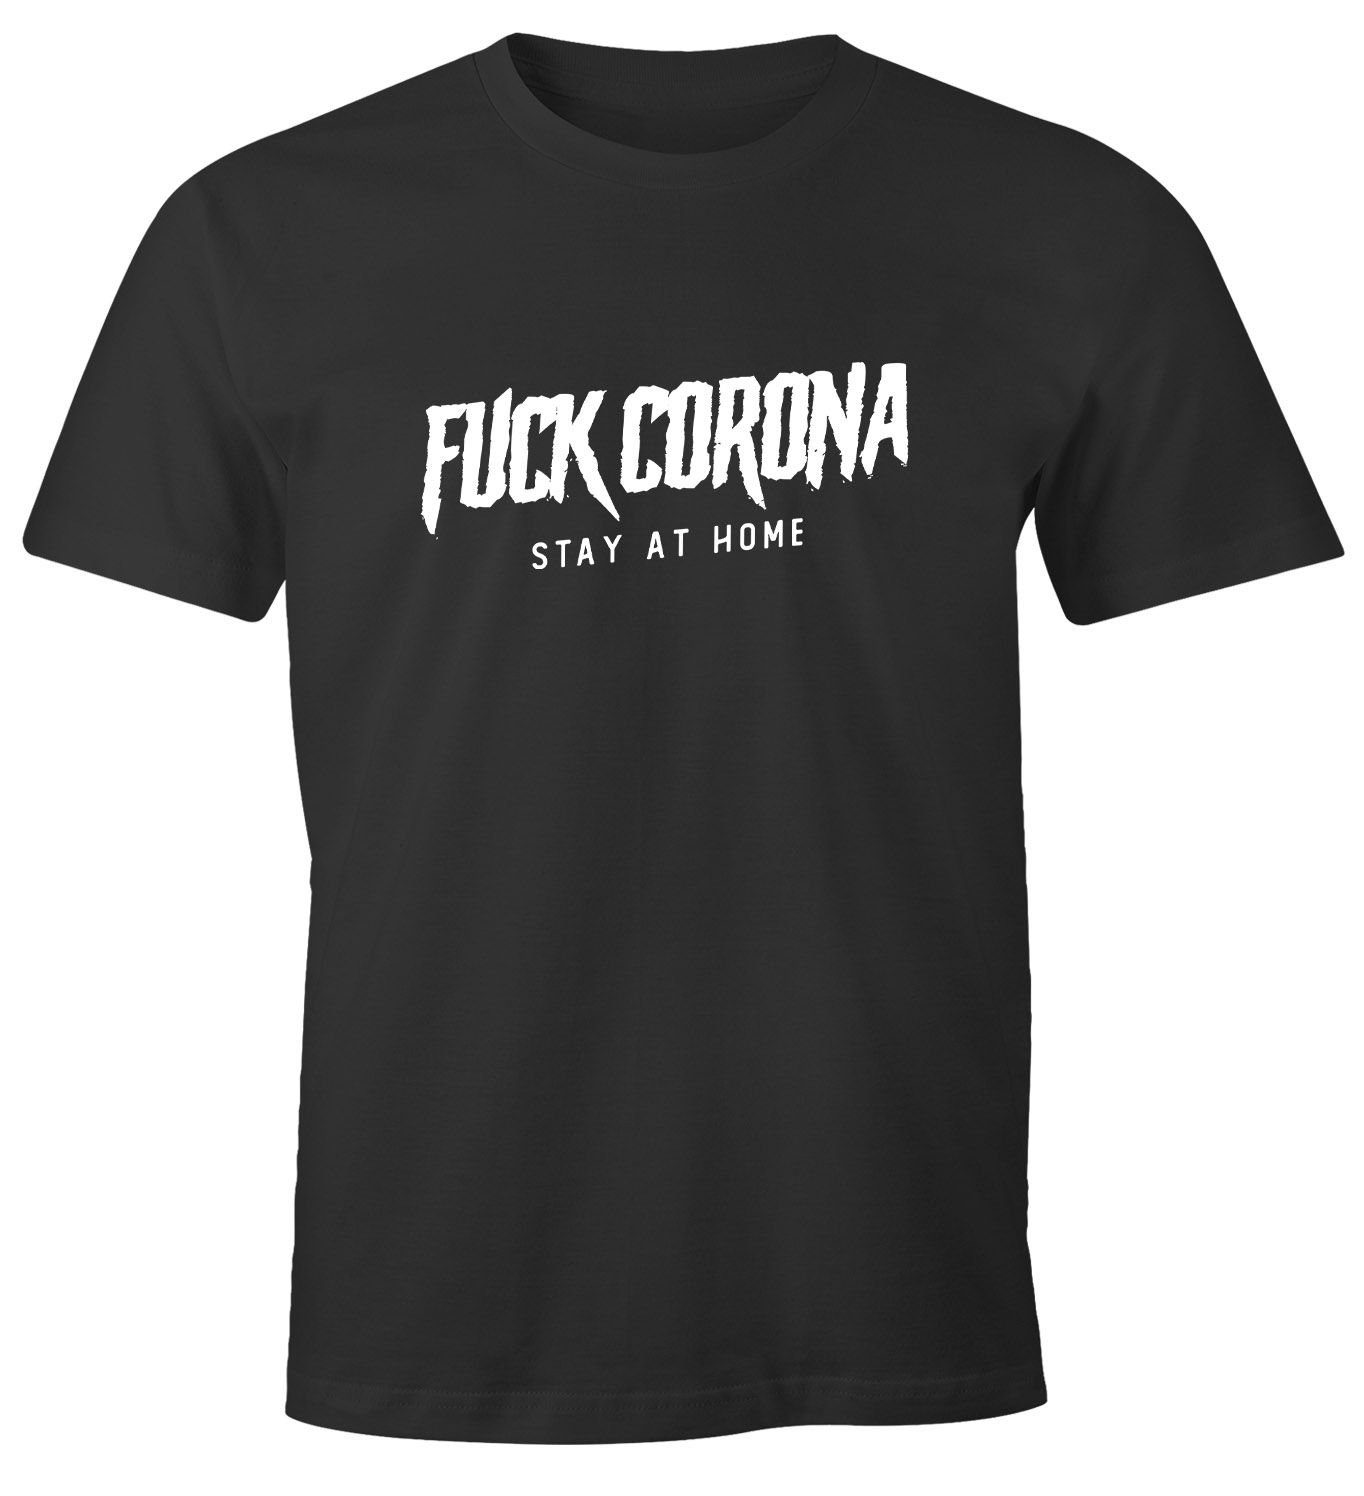 Print-Shirt T-Shirt MoonWorks Botschaft mit stay Aufruf the Corona Appell Herren Moonworks® at Print Flatten Fuck home Statement curve